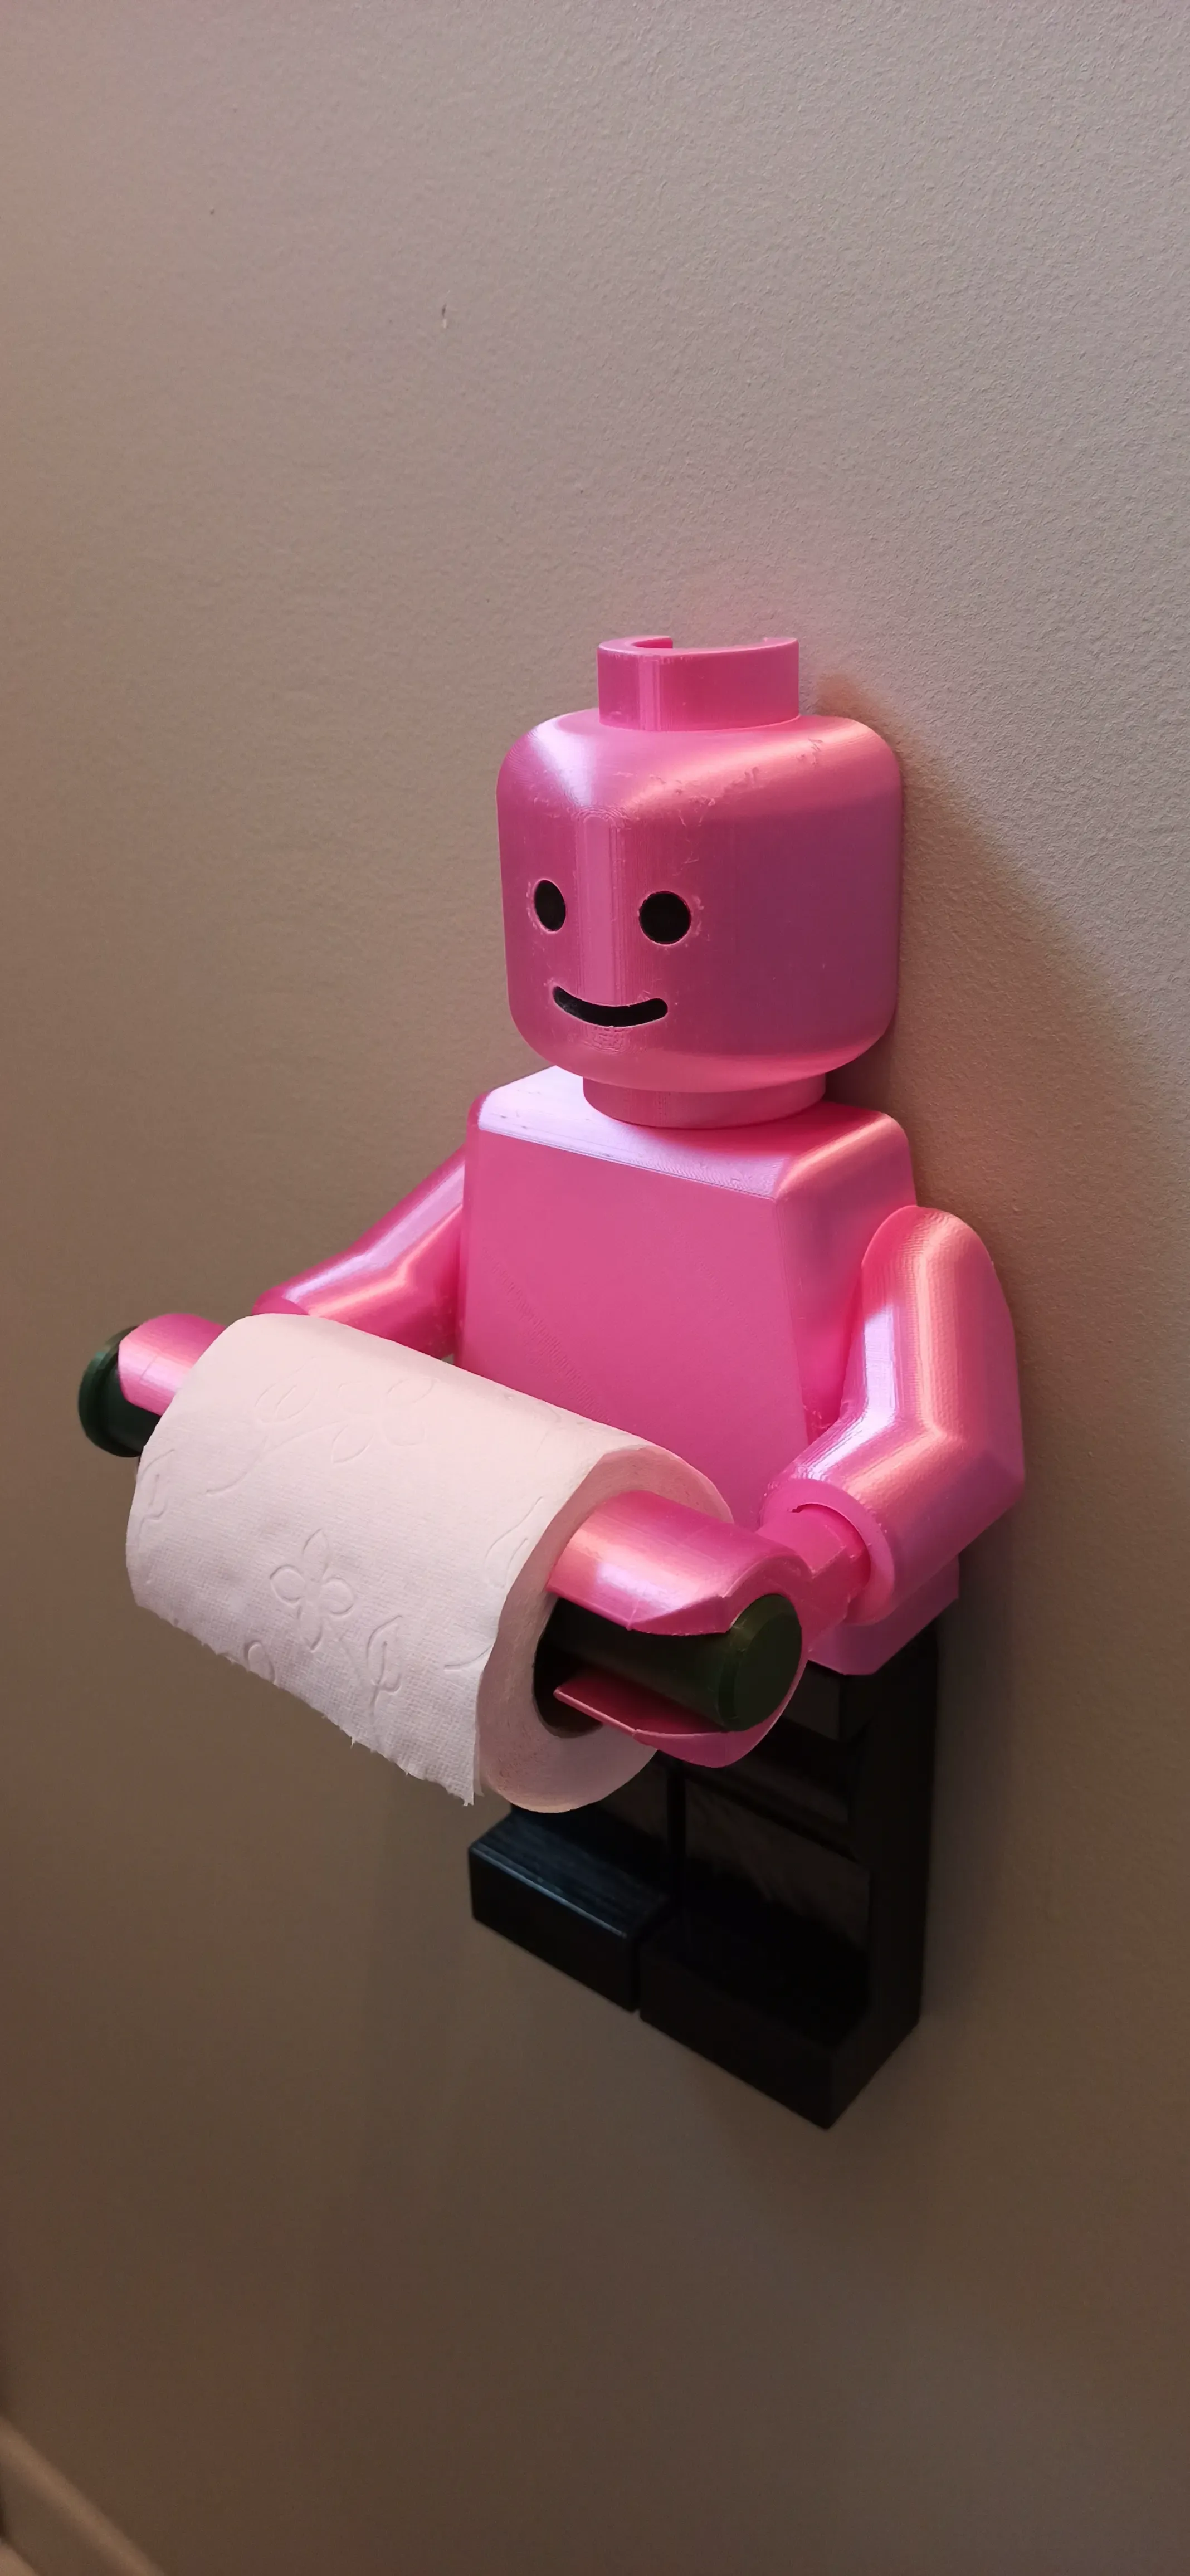 Lego man toilet holder